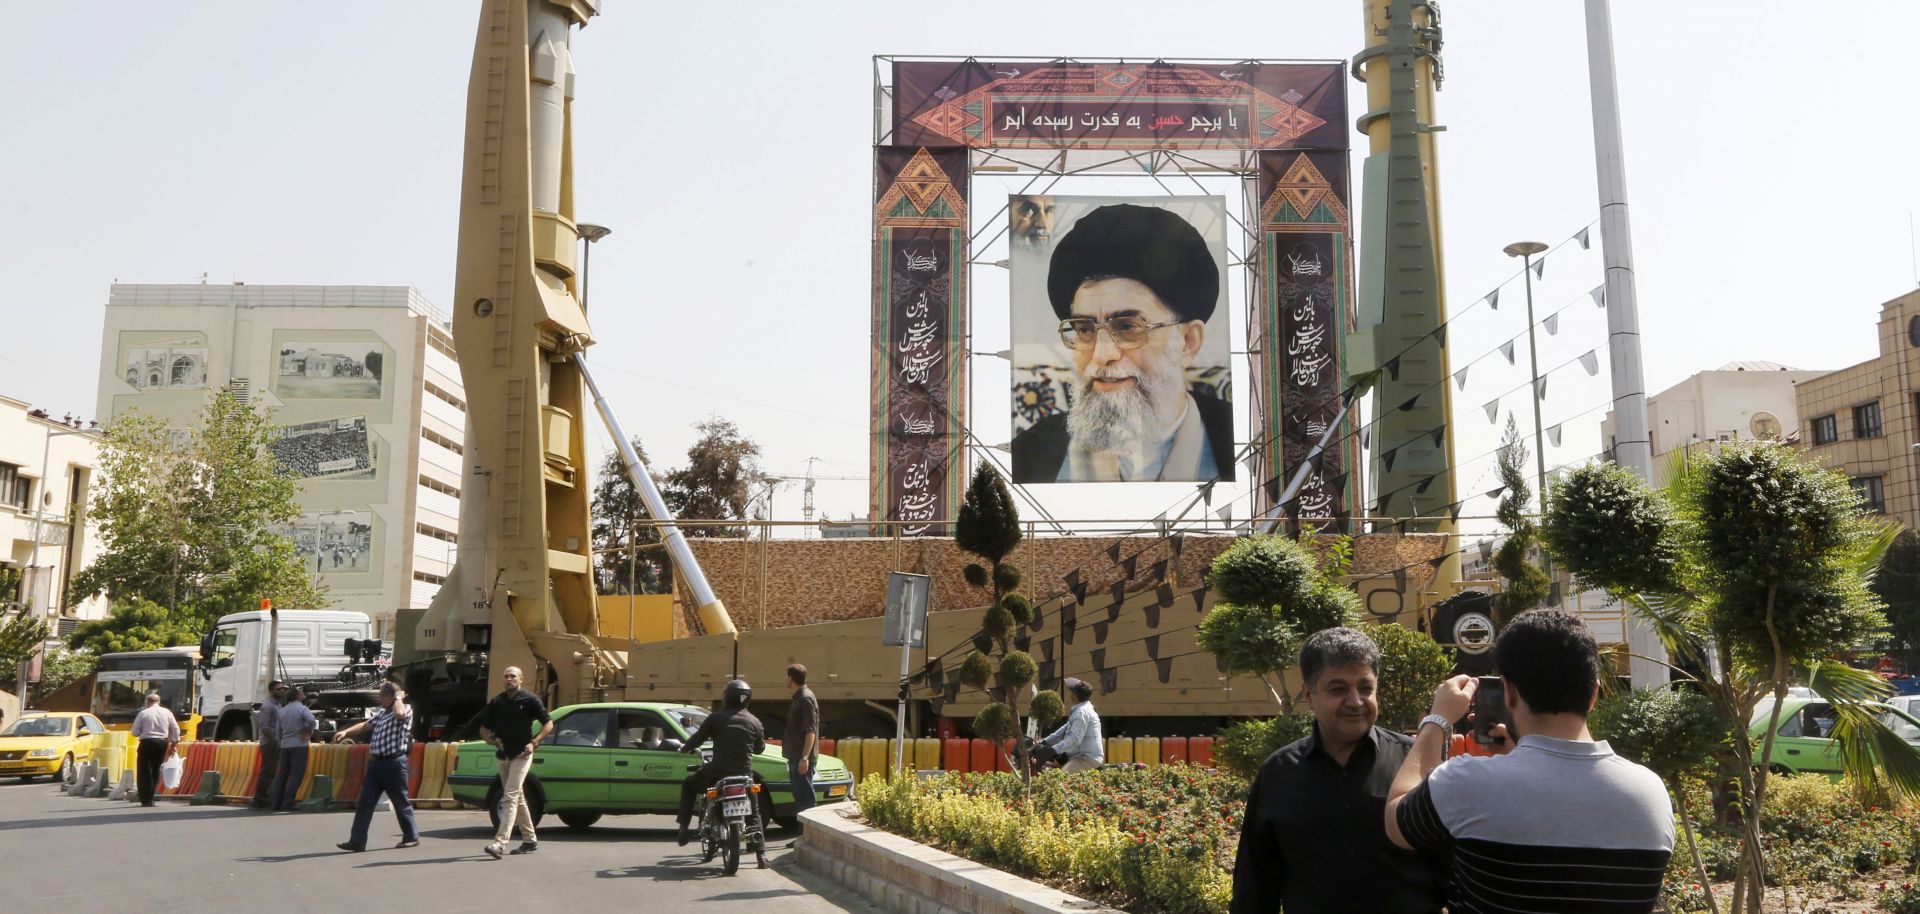 Medium-range ballistic missiles stand next to a portrait of Iranian Supreme Leader Ayatollah Ali Khamenei in Tehran on Sept. 25, 2017, during commemorations marking the anniversary of the 1980s Iran-Iraq war.